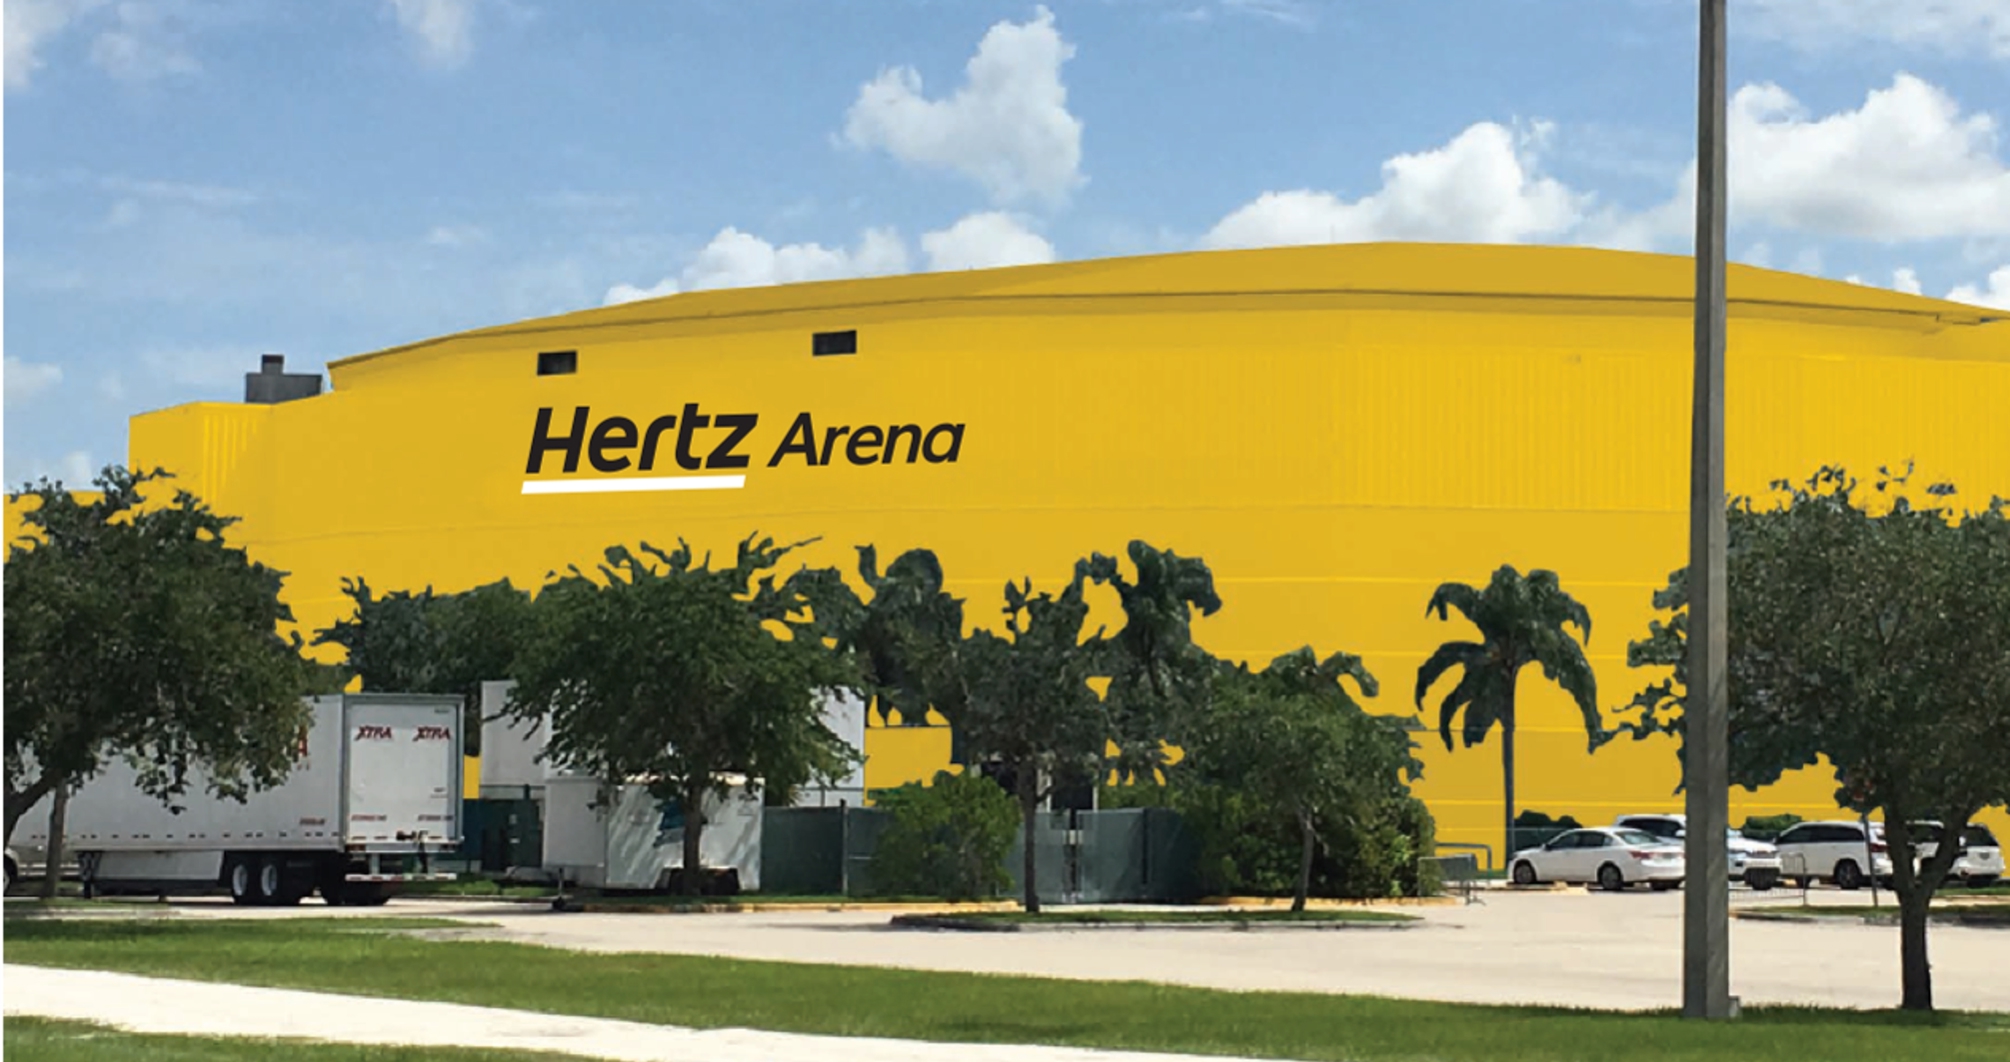 Hertz Arena - Wikipedia